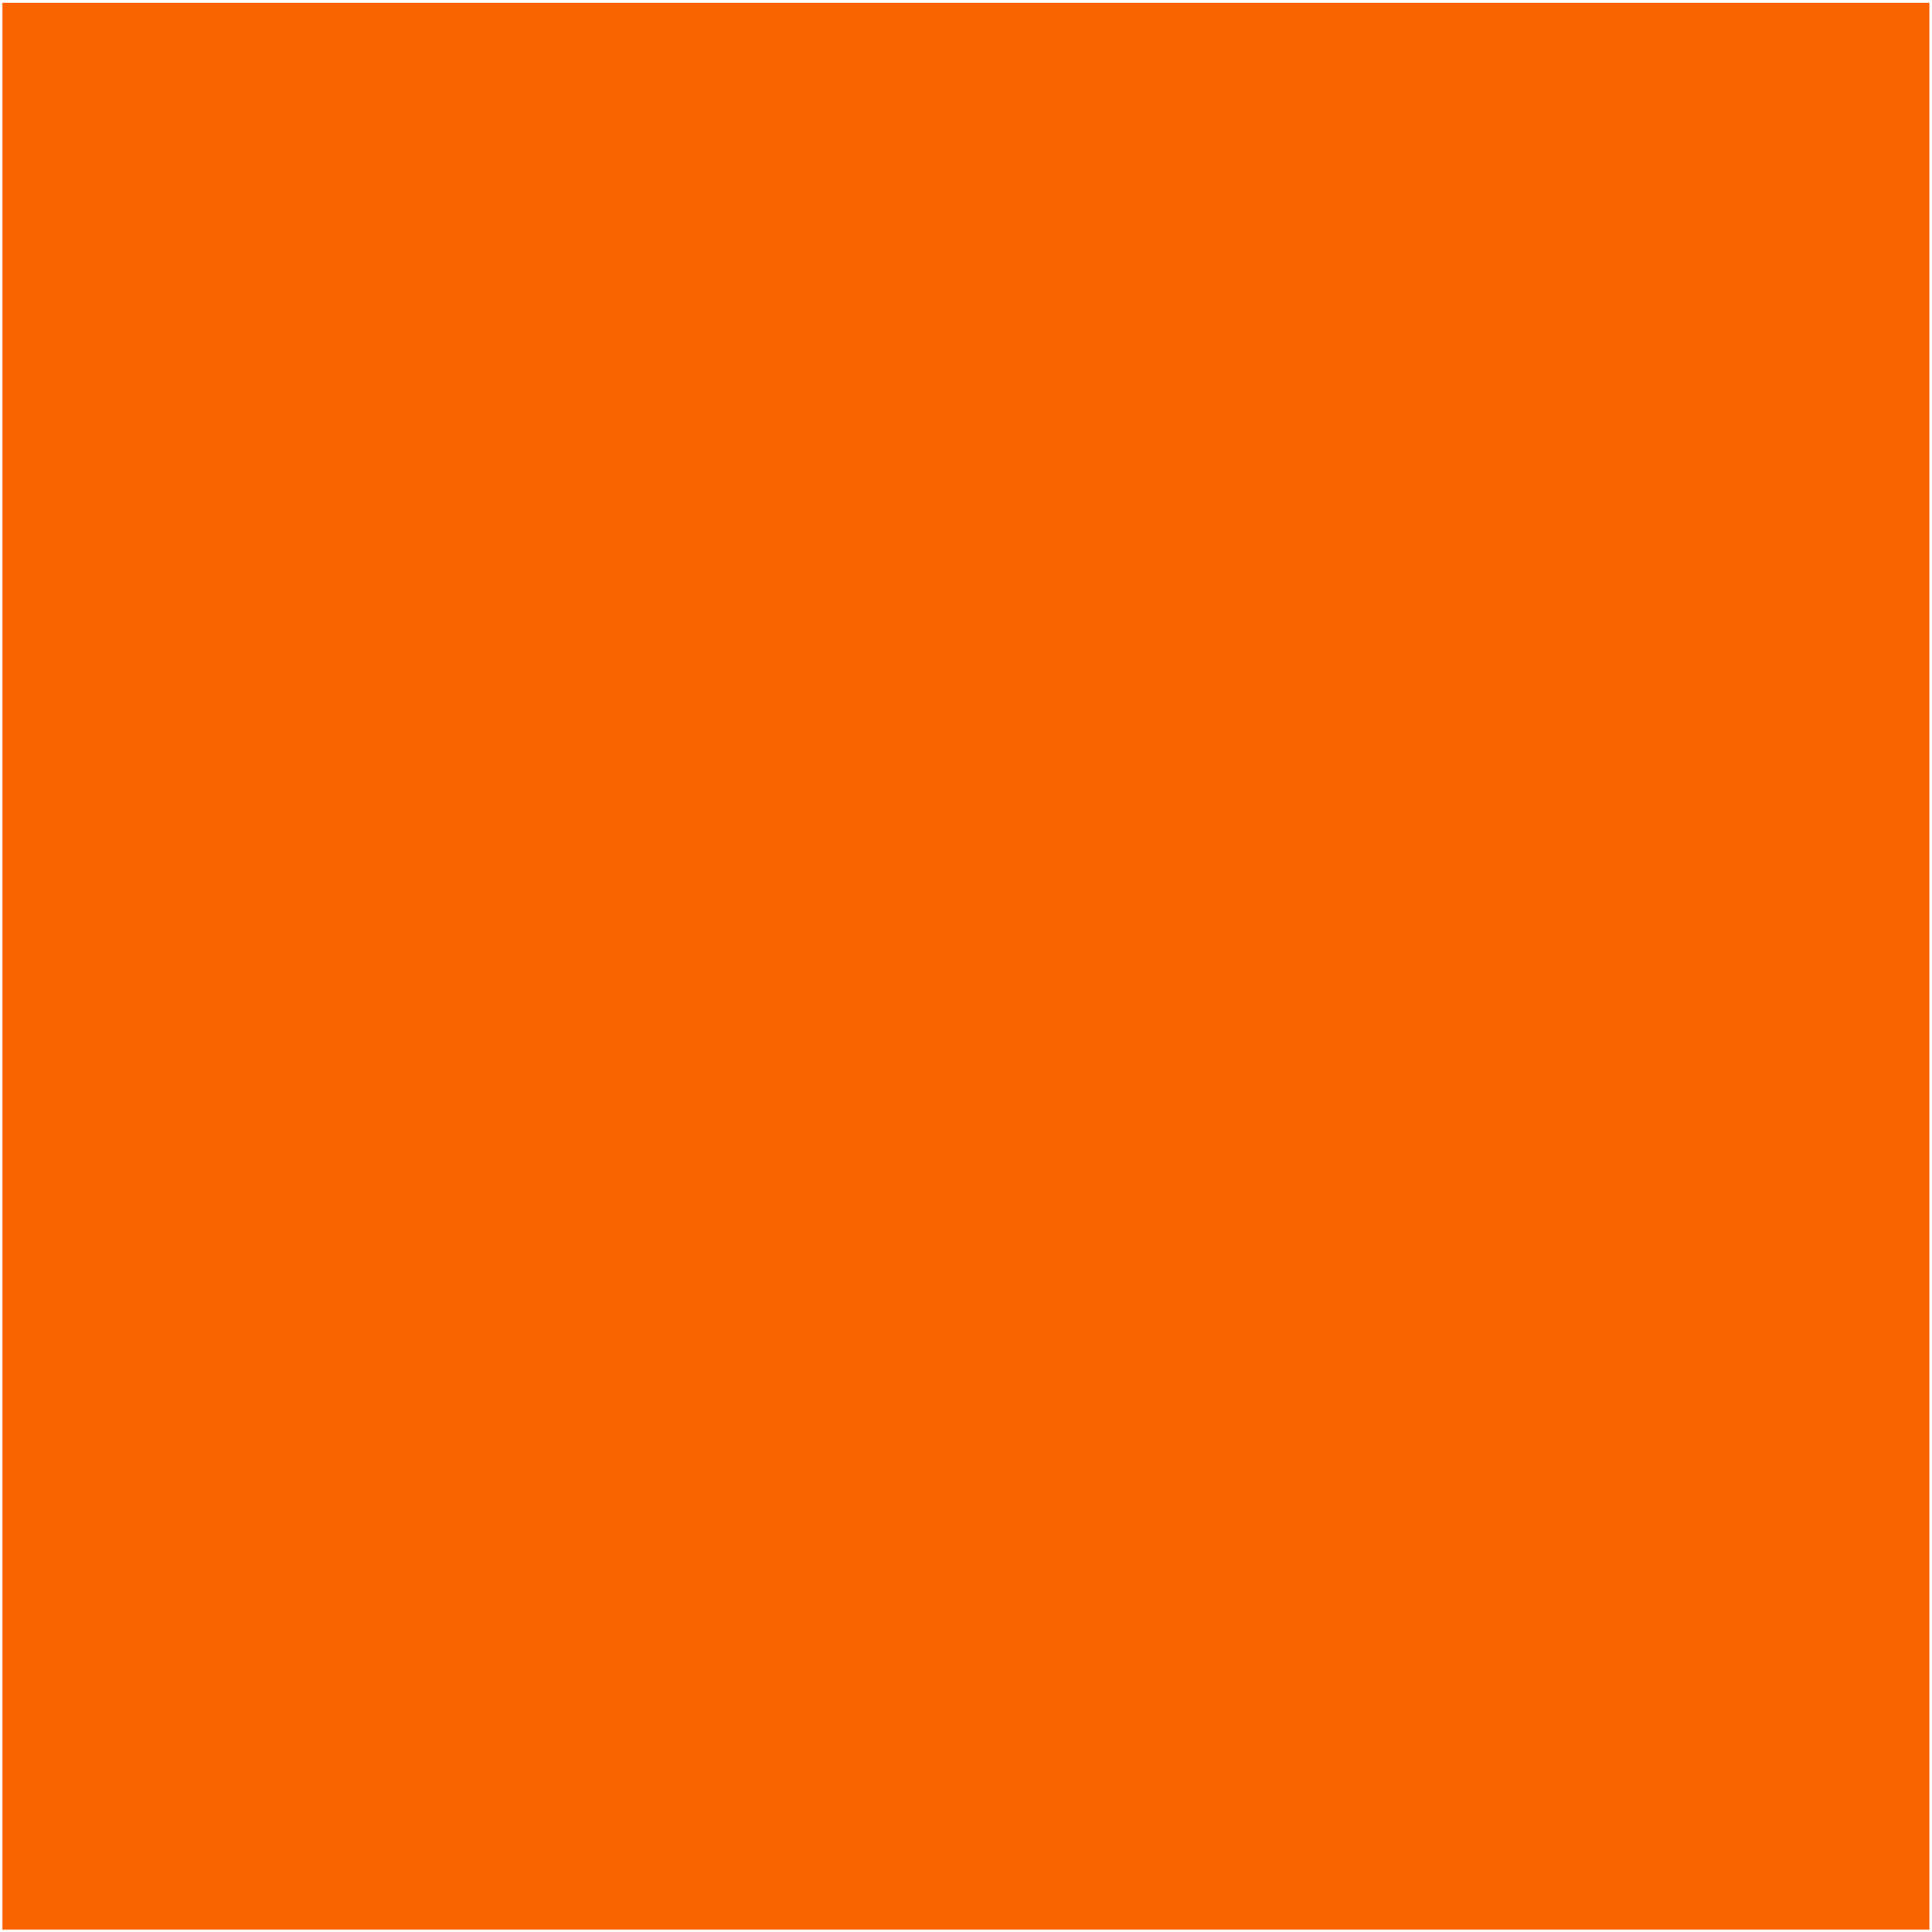 Orange hex code color bar